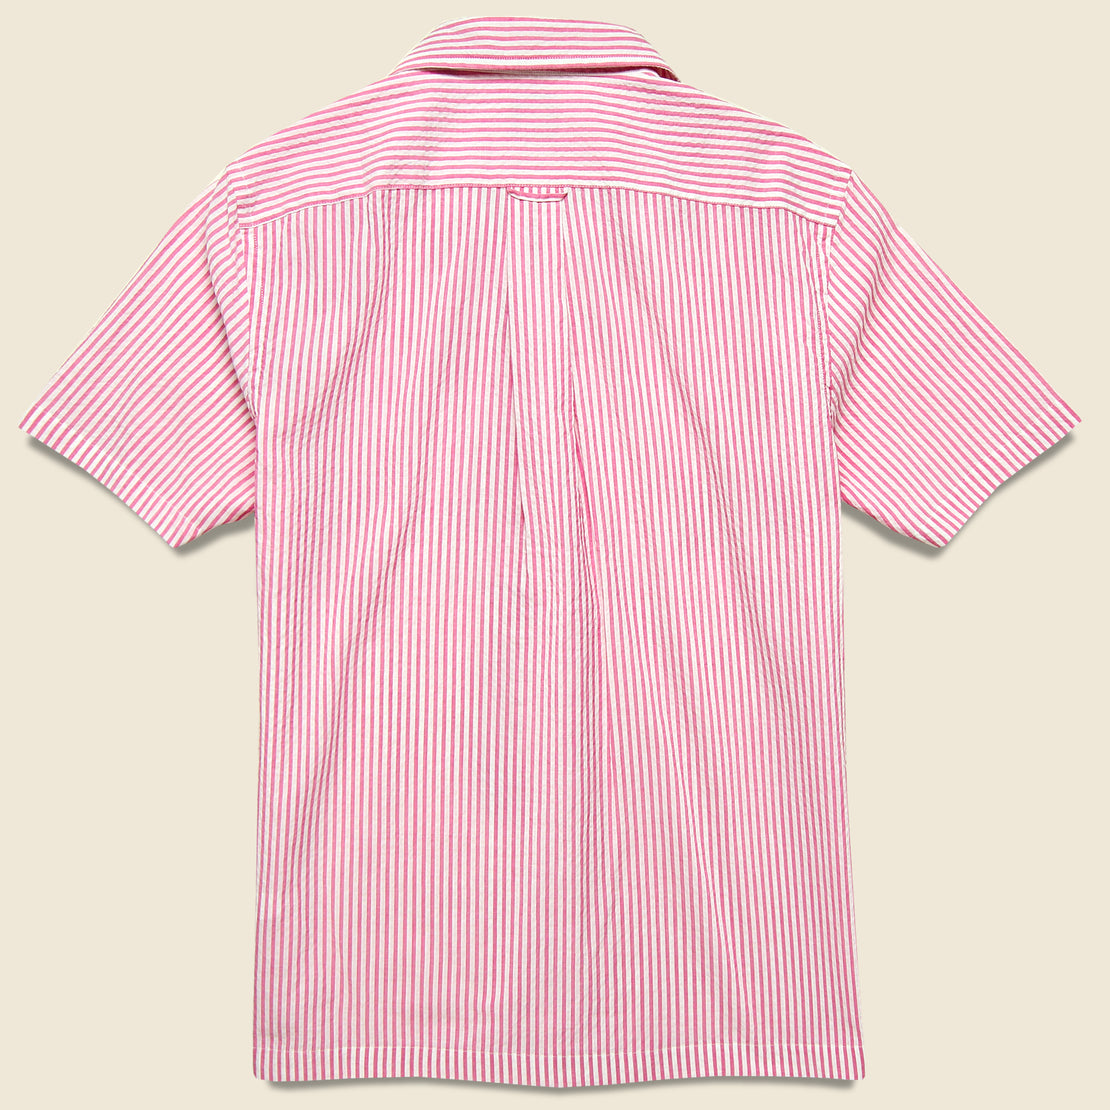 Stripe Seersucker Camp Shirt - Pink